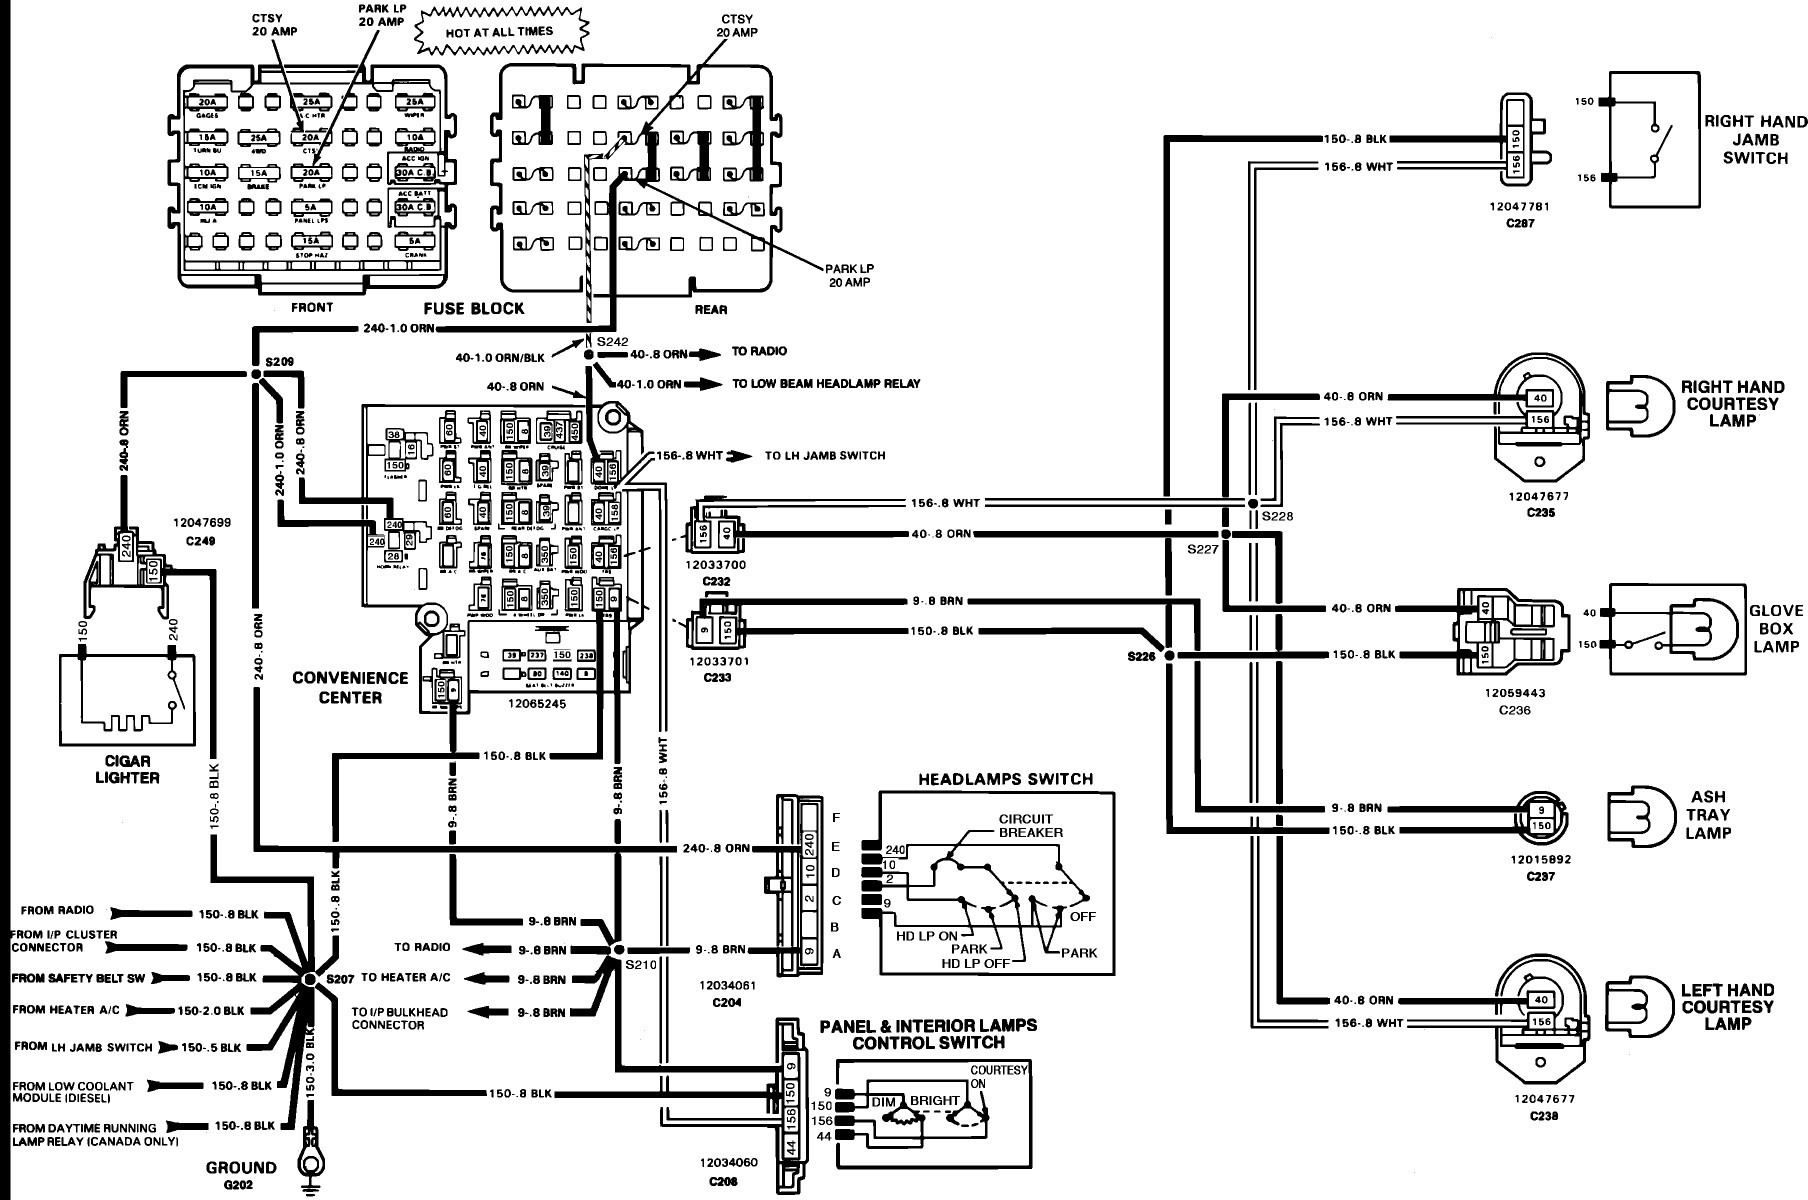 2005 Chevy Silverado Parts Diagram Suburban Parts Diagram Besides Gm Bulkhead Connector Wiring Diagram Of 2005 Chevy Silverado Parts Diagram